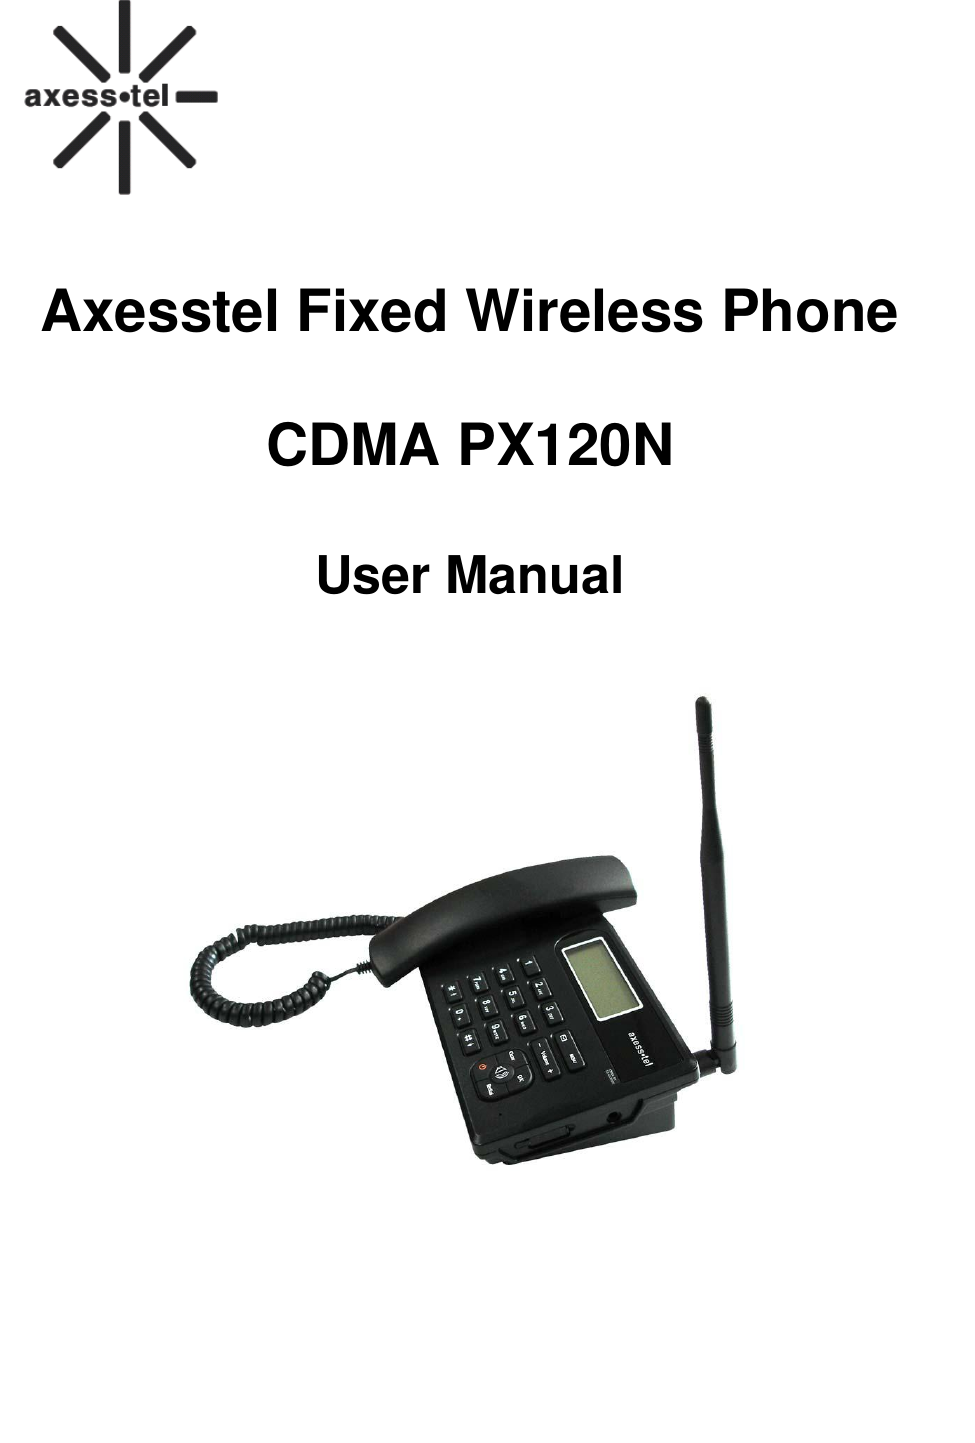      Axesstel Fixed Wireless Phone  CDMA PX120N   User Manual              